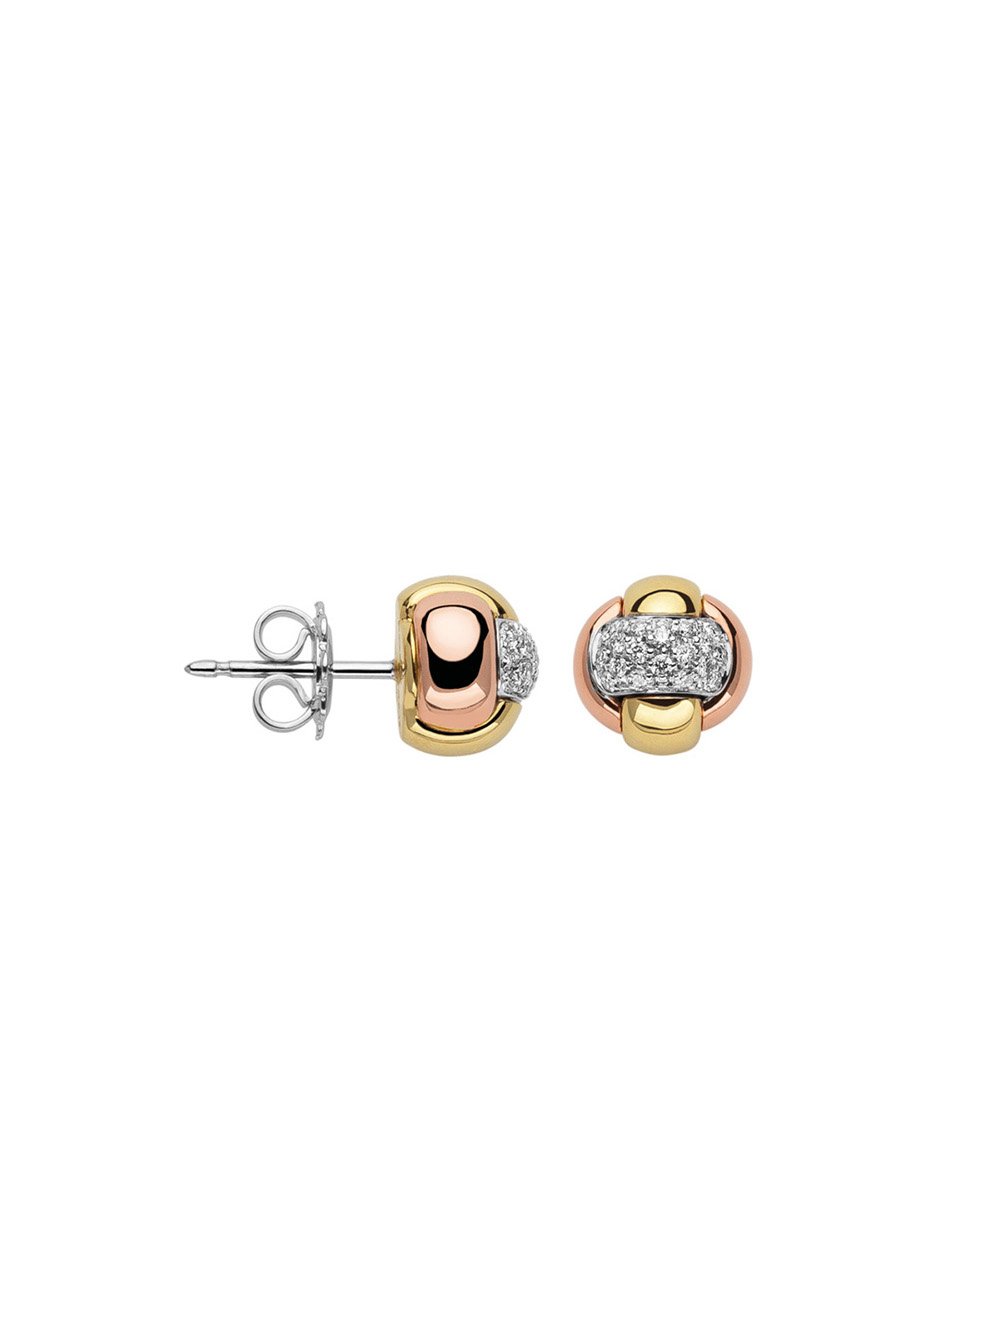 Fope Eka Earrings in 18ct Yellow & Rose Gold with Diamonds